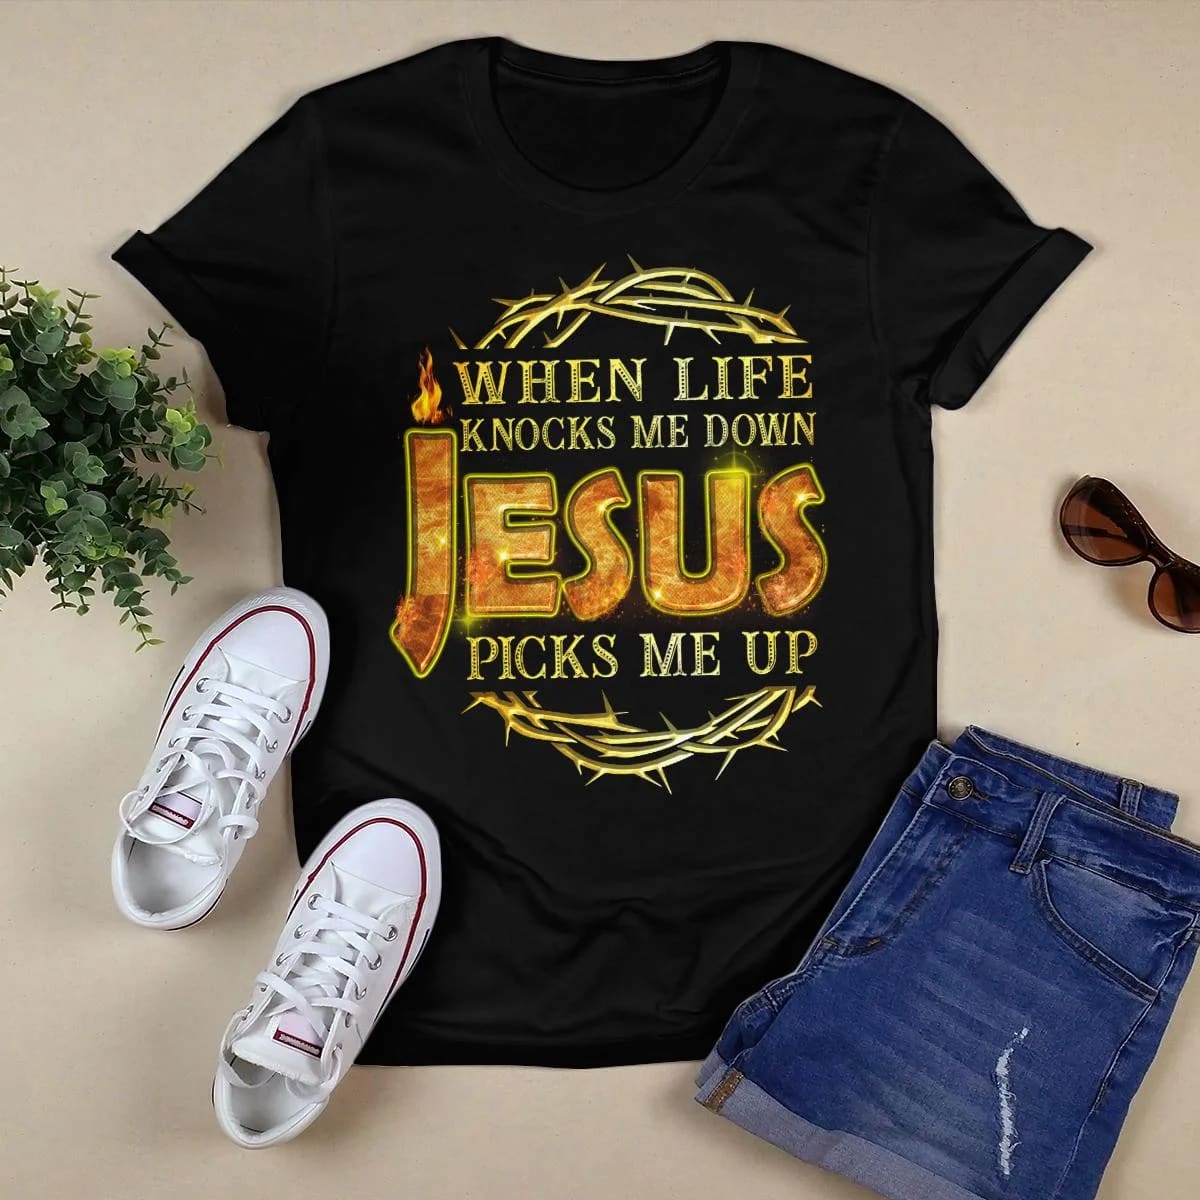 When Life Knocks Me Down Jesus Picks Me Up T-Shirt, Religious T-Shirt, Jesus Sweatshirt Hoodie, God T-Shirt